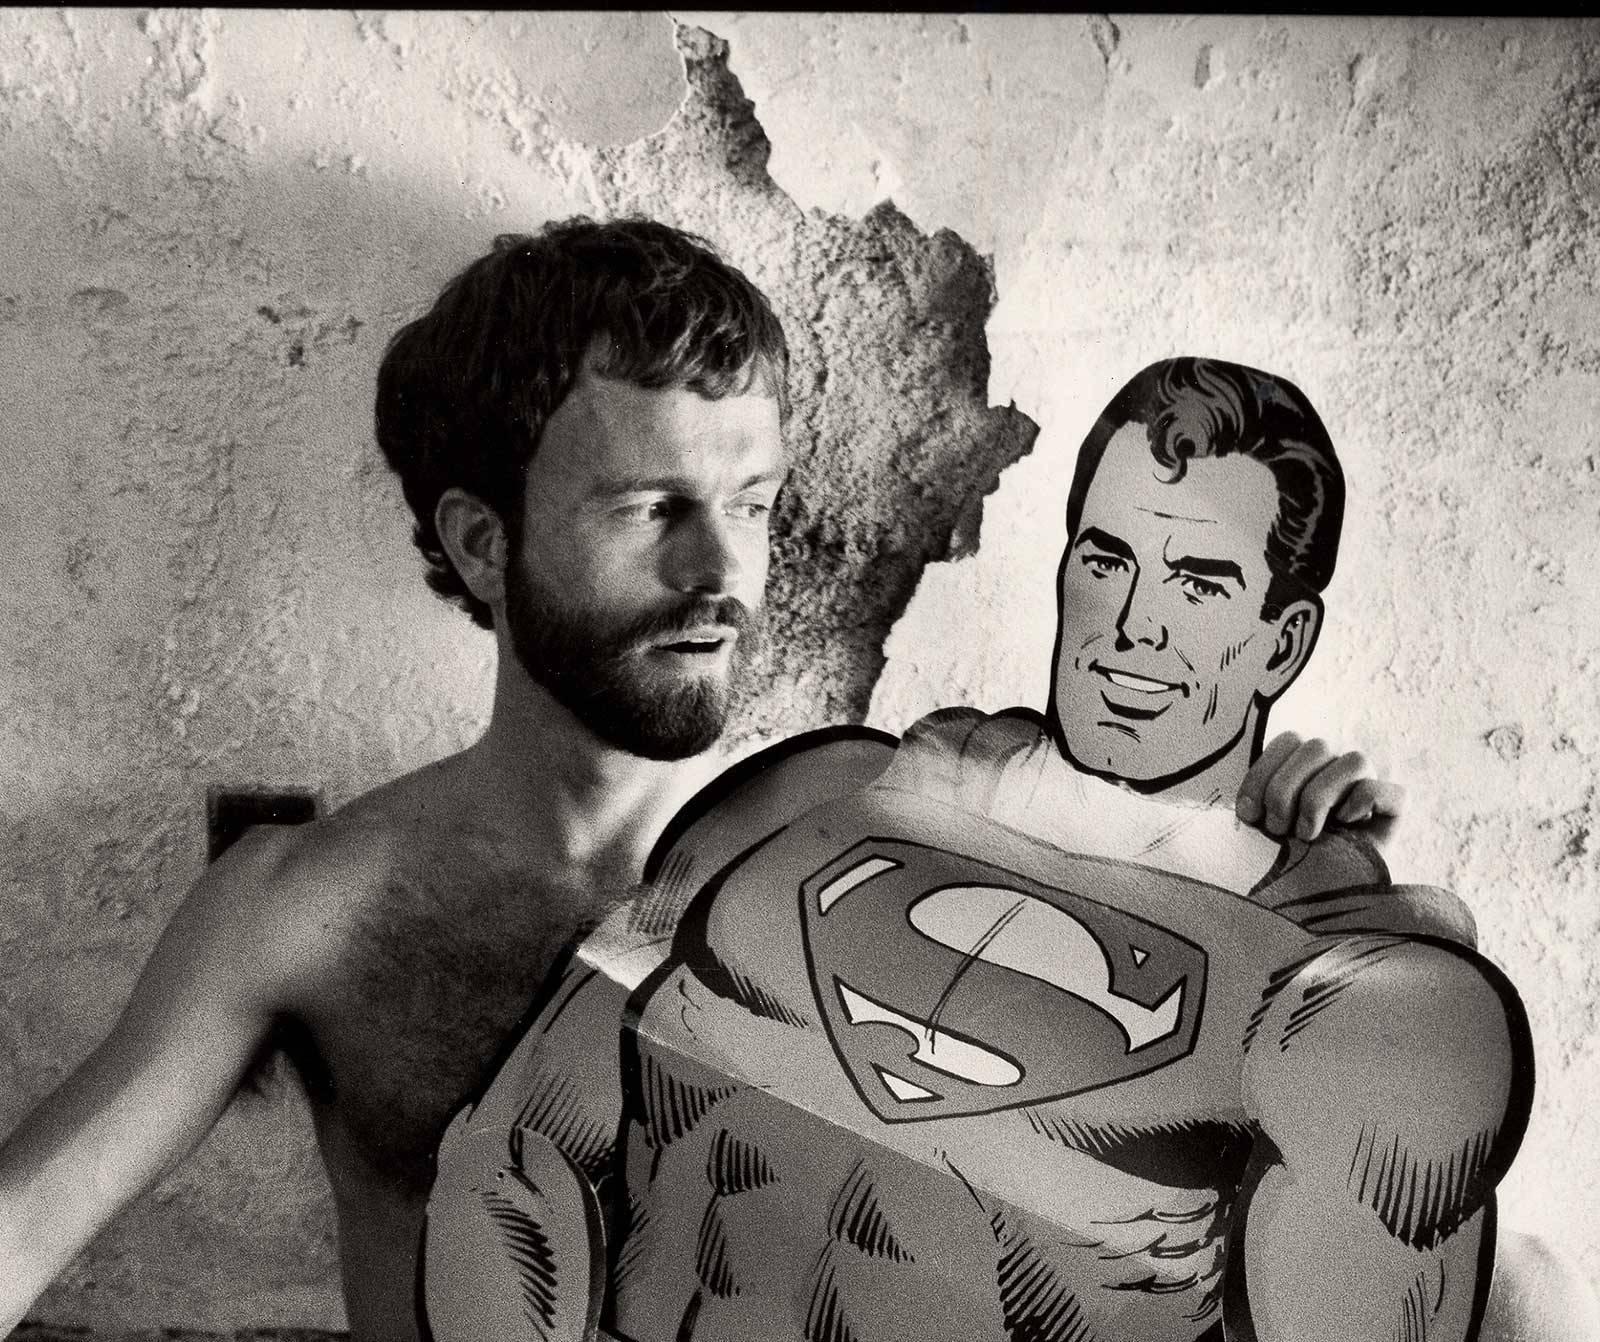 Superman Fantasy, New York (Male Nude fills the gap in super hero cutout figure) - Photograph by Arthur Tress